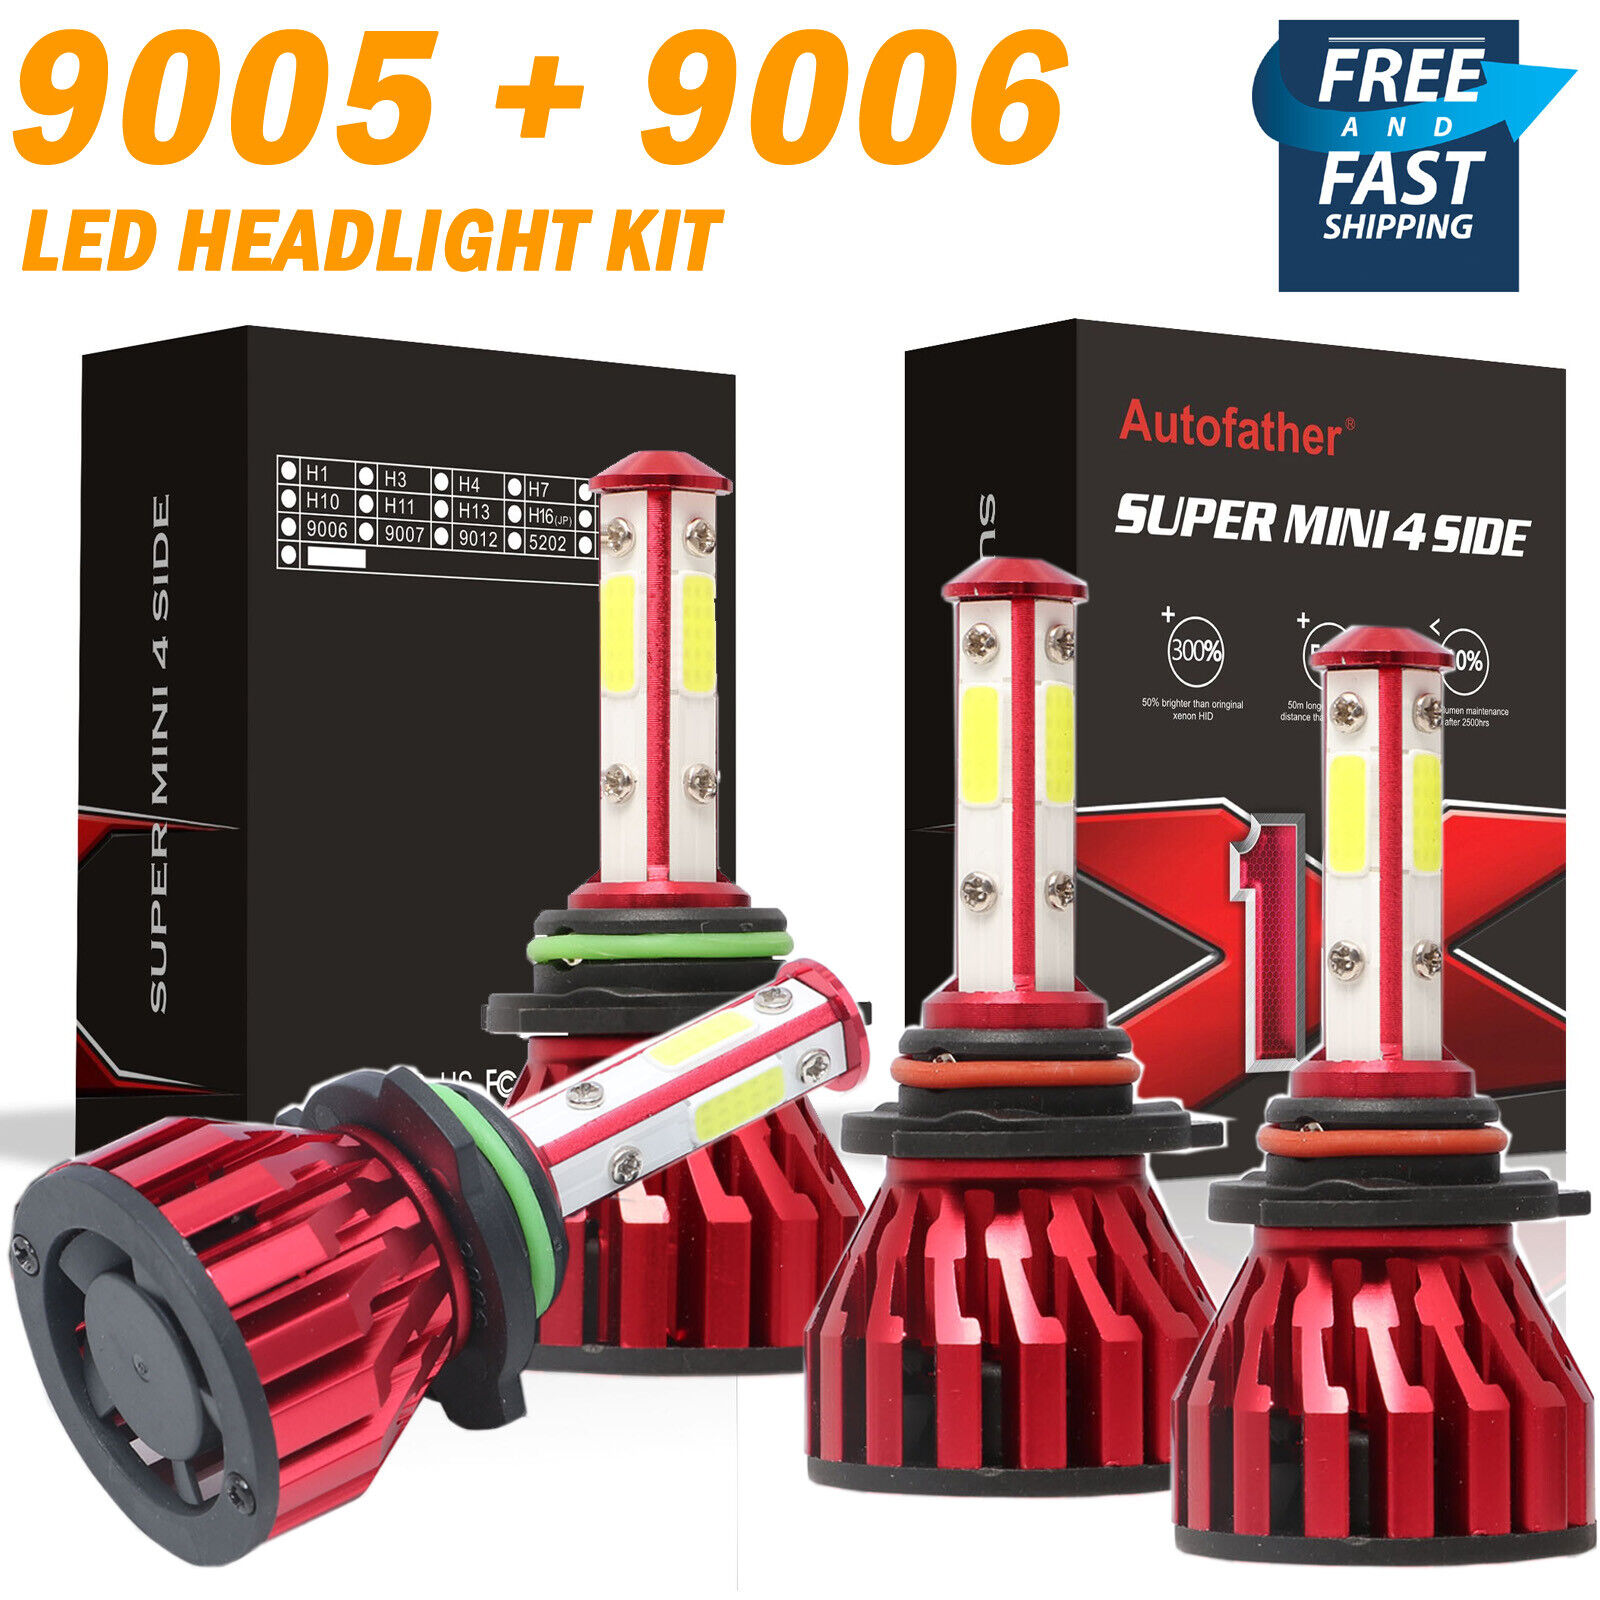 9005 9006 4-Sides LED 960W 96000LM Combo Headlights Kit Hi Low Beam Bulbs Bright